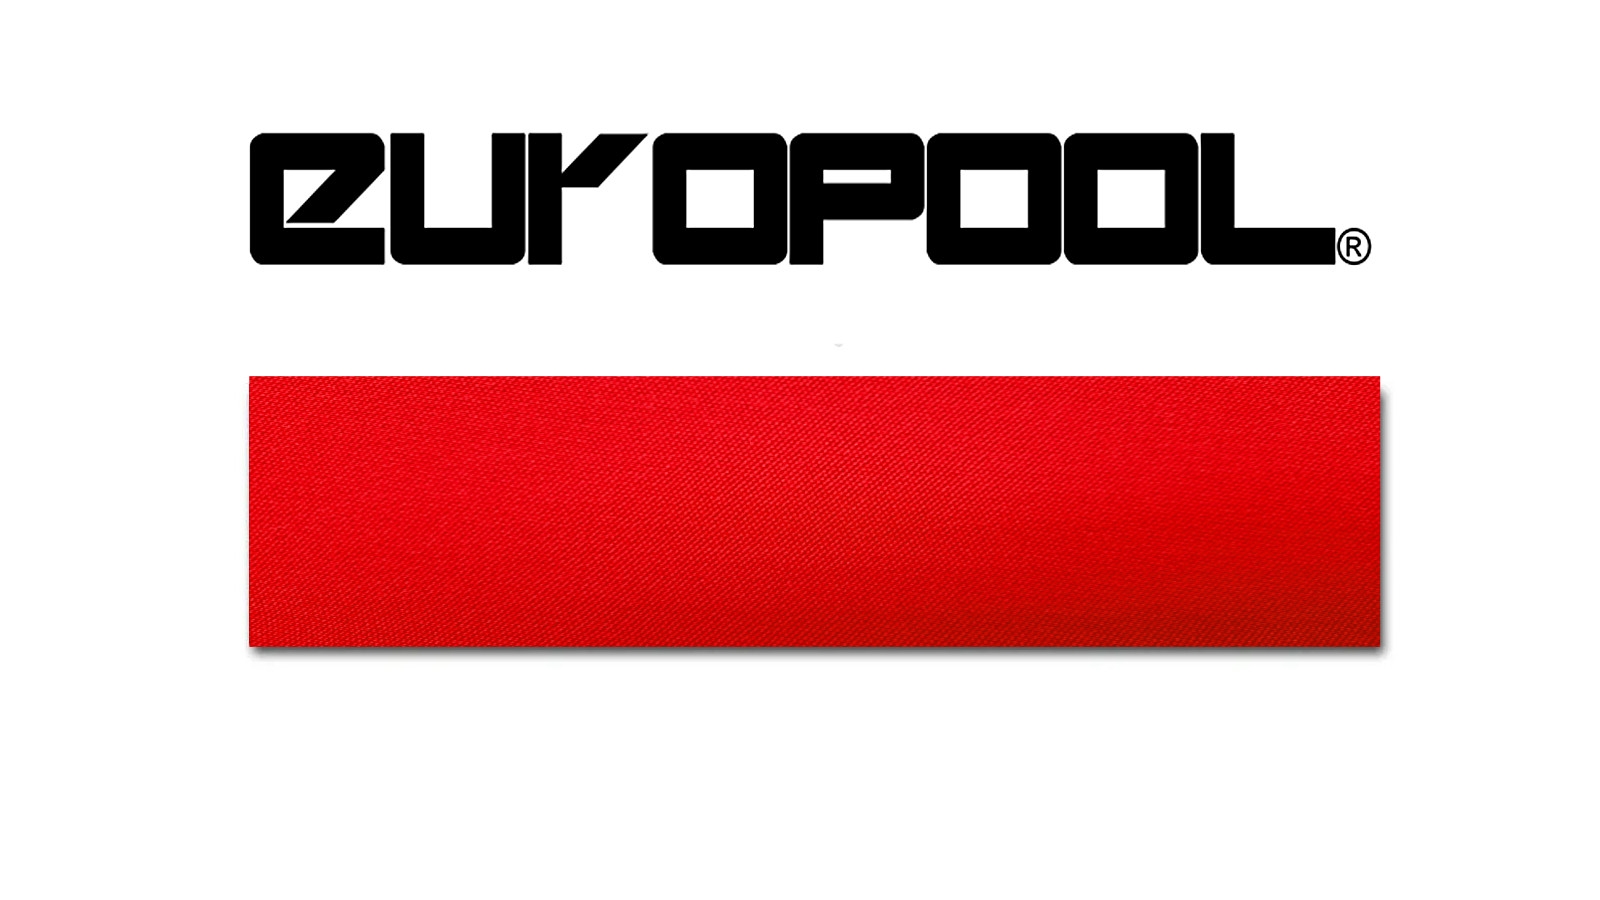 Sukno bilardowe EUROPOOL Red